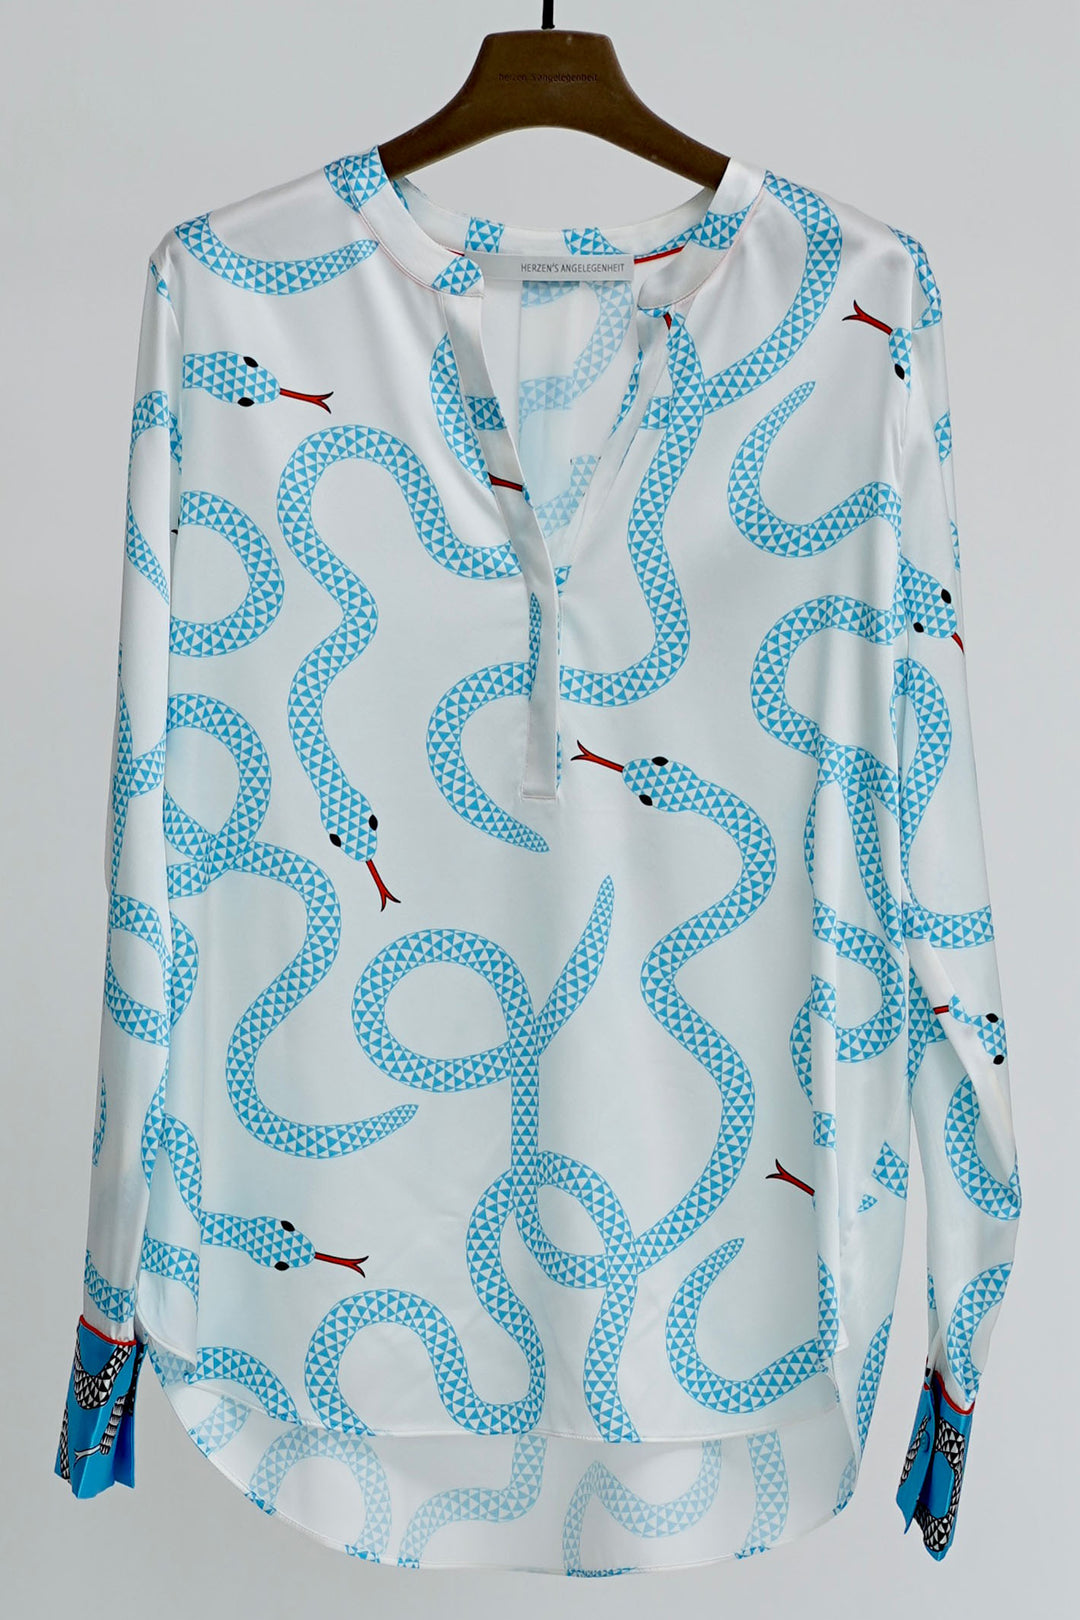 Herzen's Angelegenheit 6164-241-241033 Aquarius Snake Print Silk Blouse - Olivia Grace Fashion